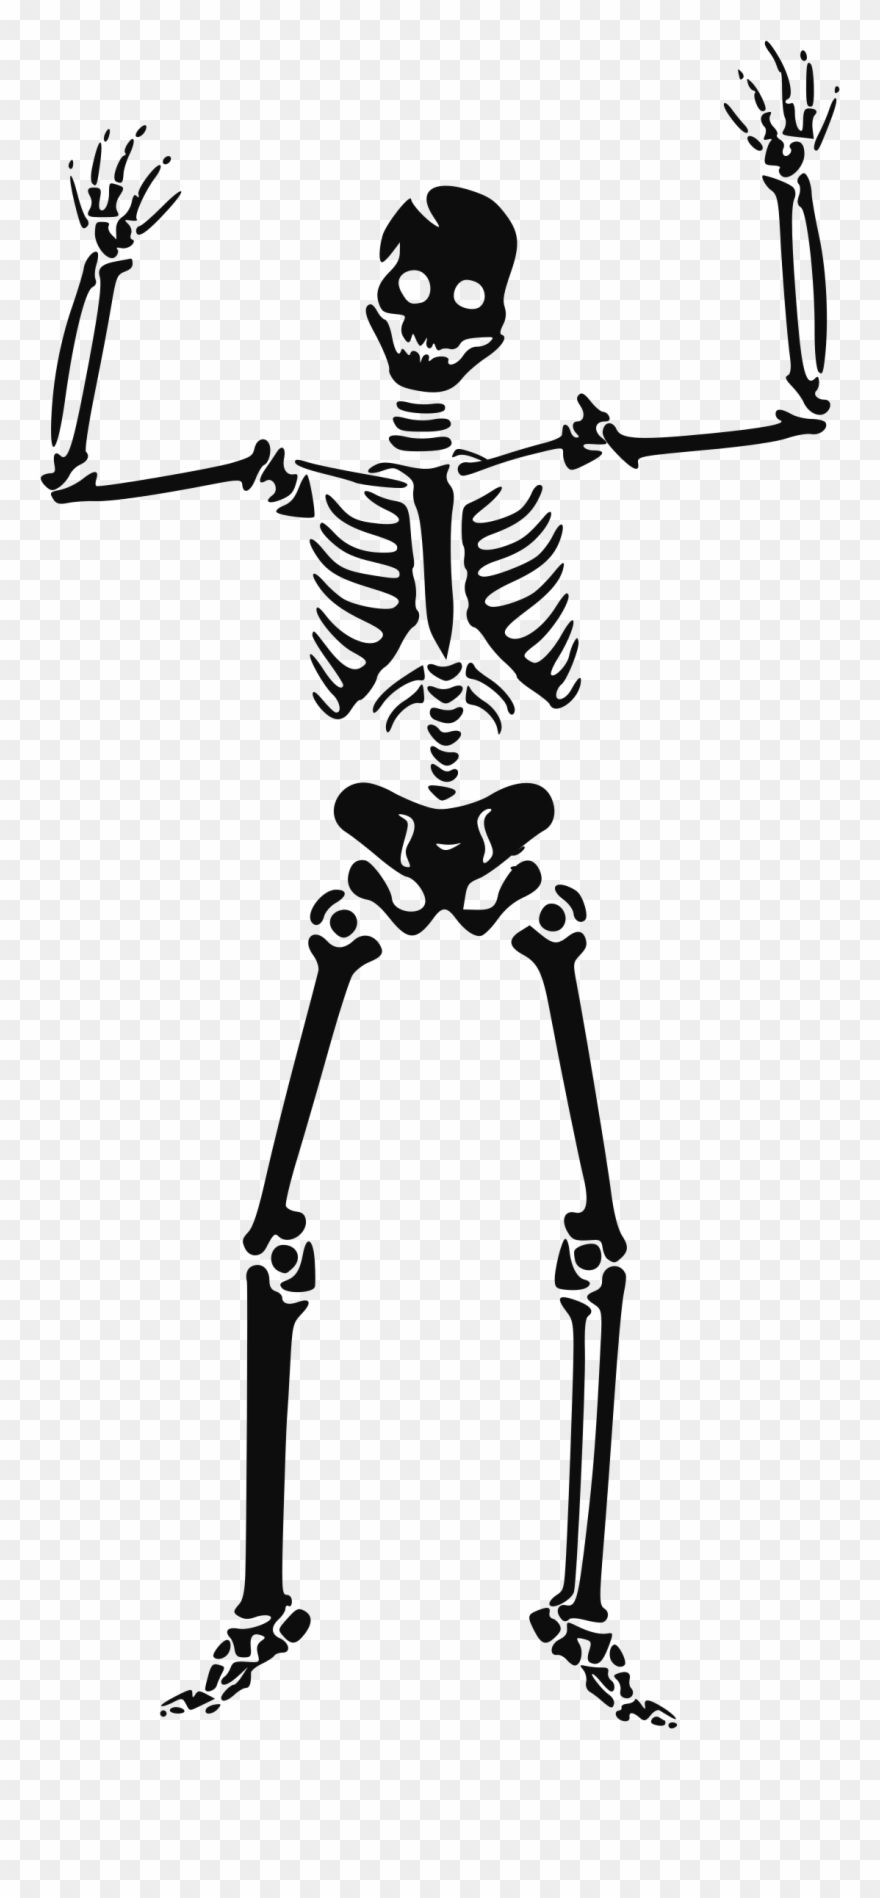 Skeleton clipart file. Transparent halloween 